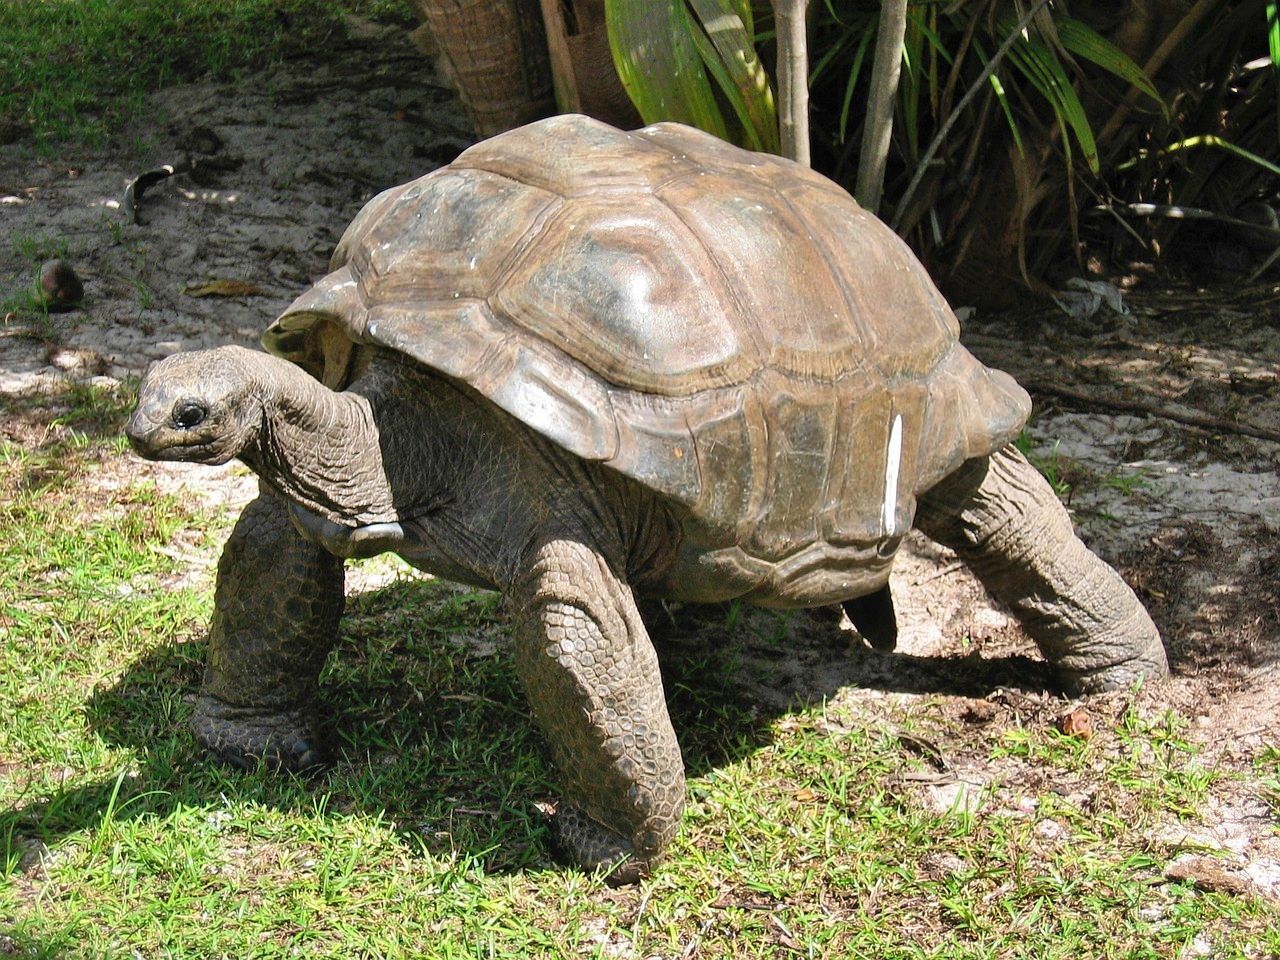 Giant tortoise on Curieuse Island